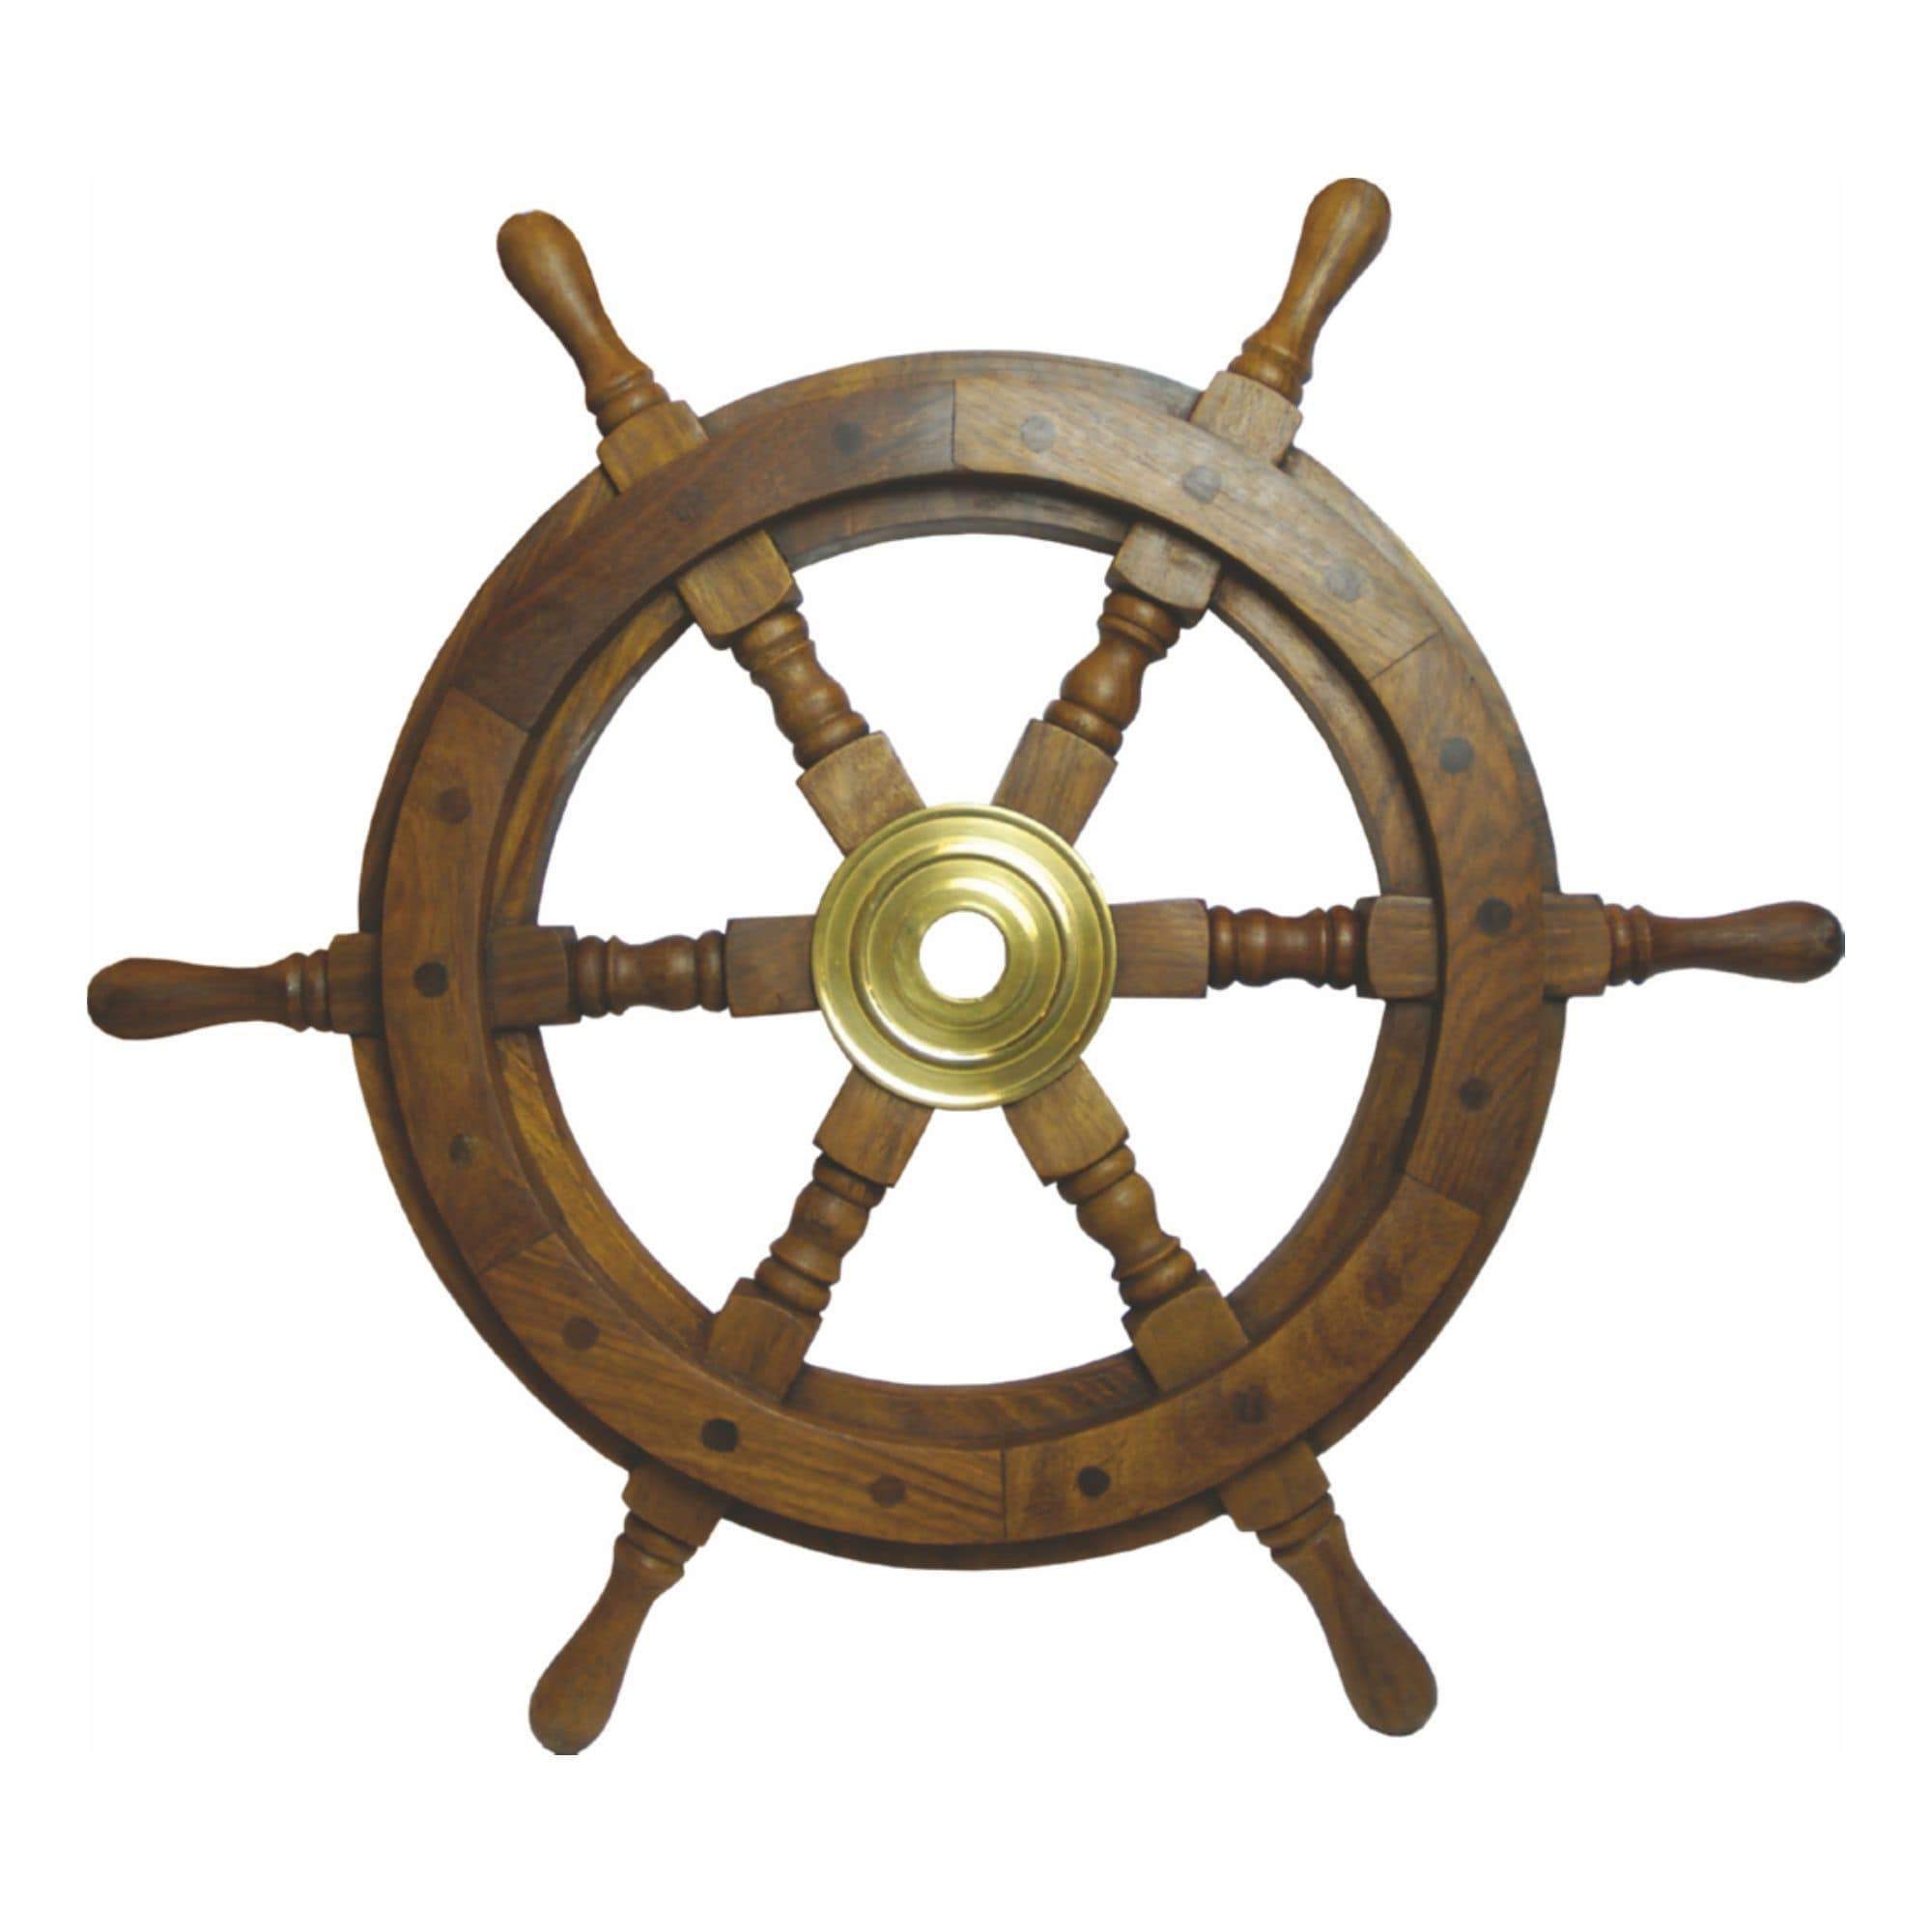 Wooden Ships Wheel – Smallest Size